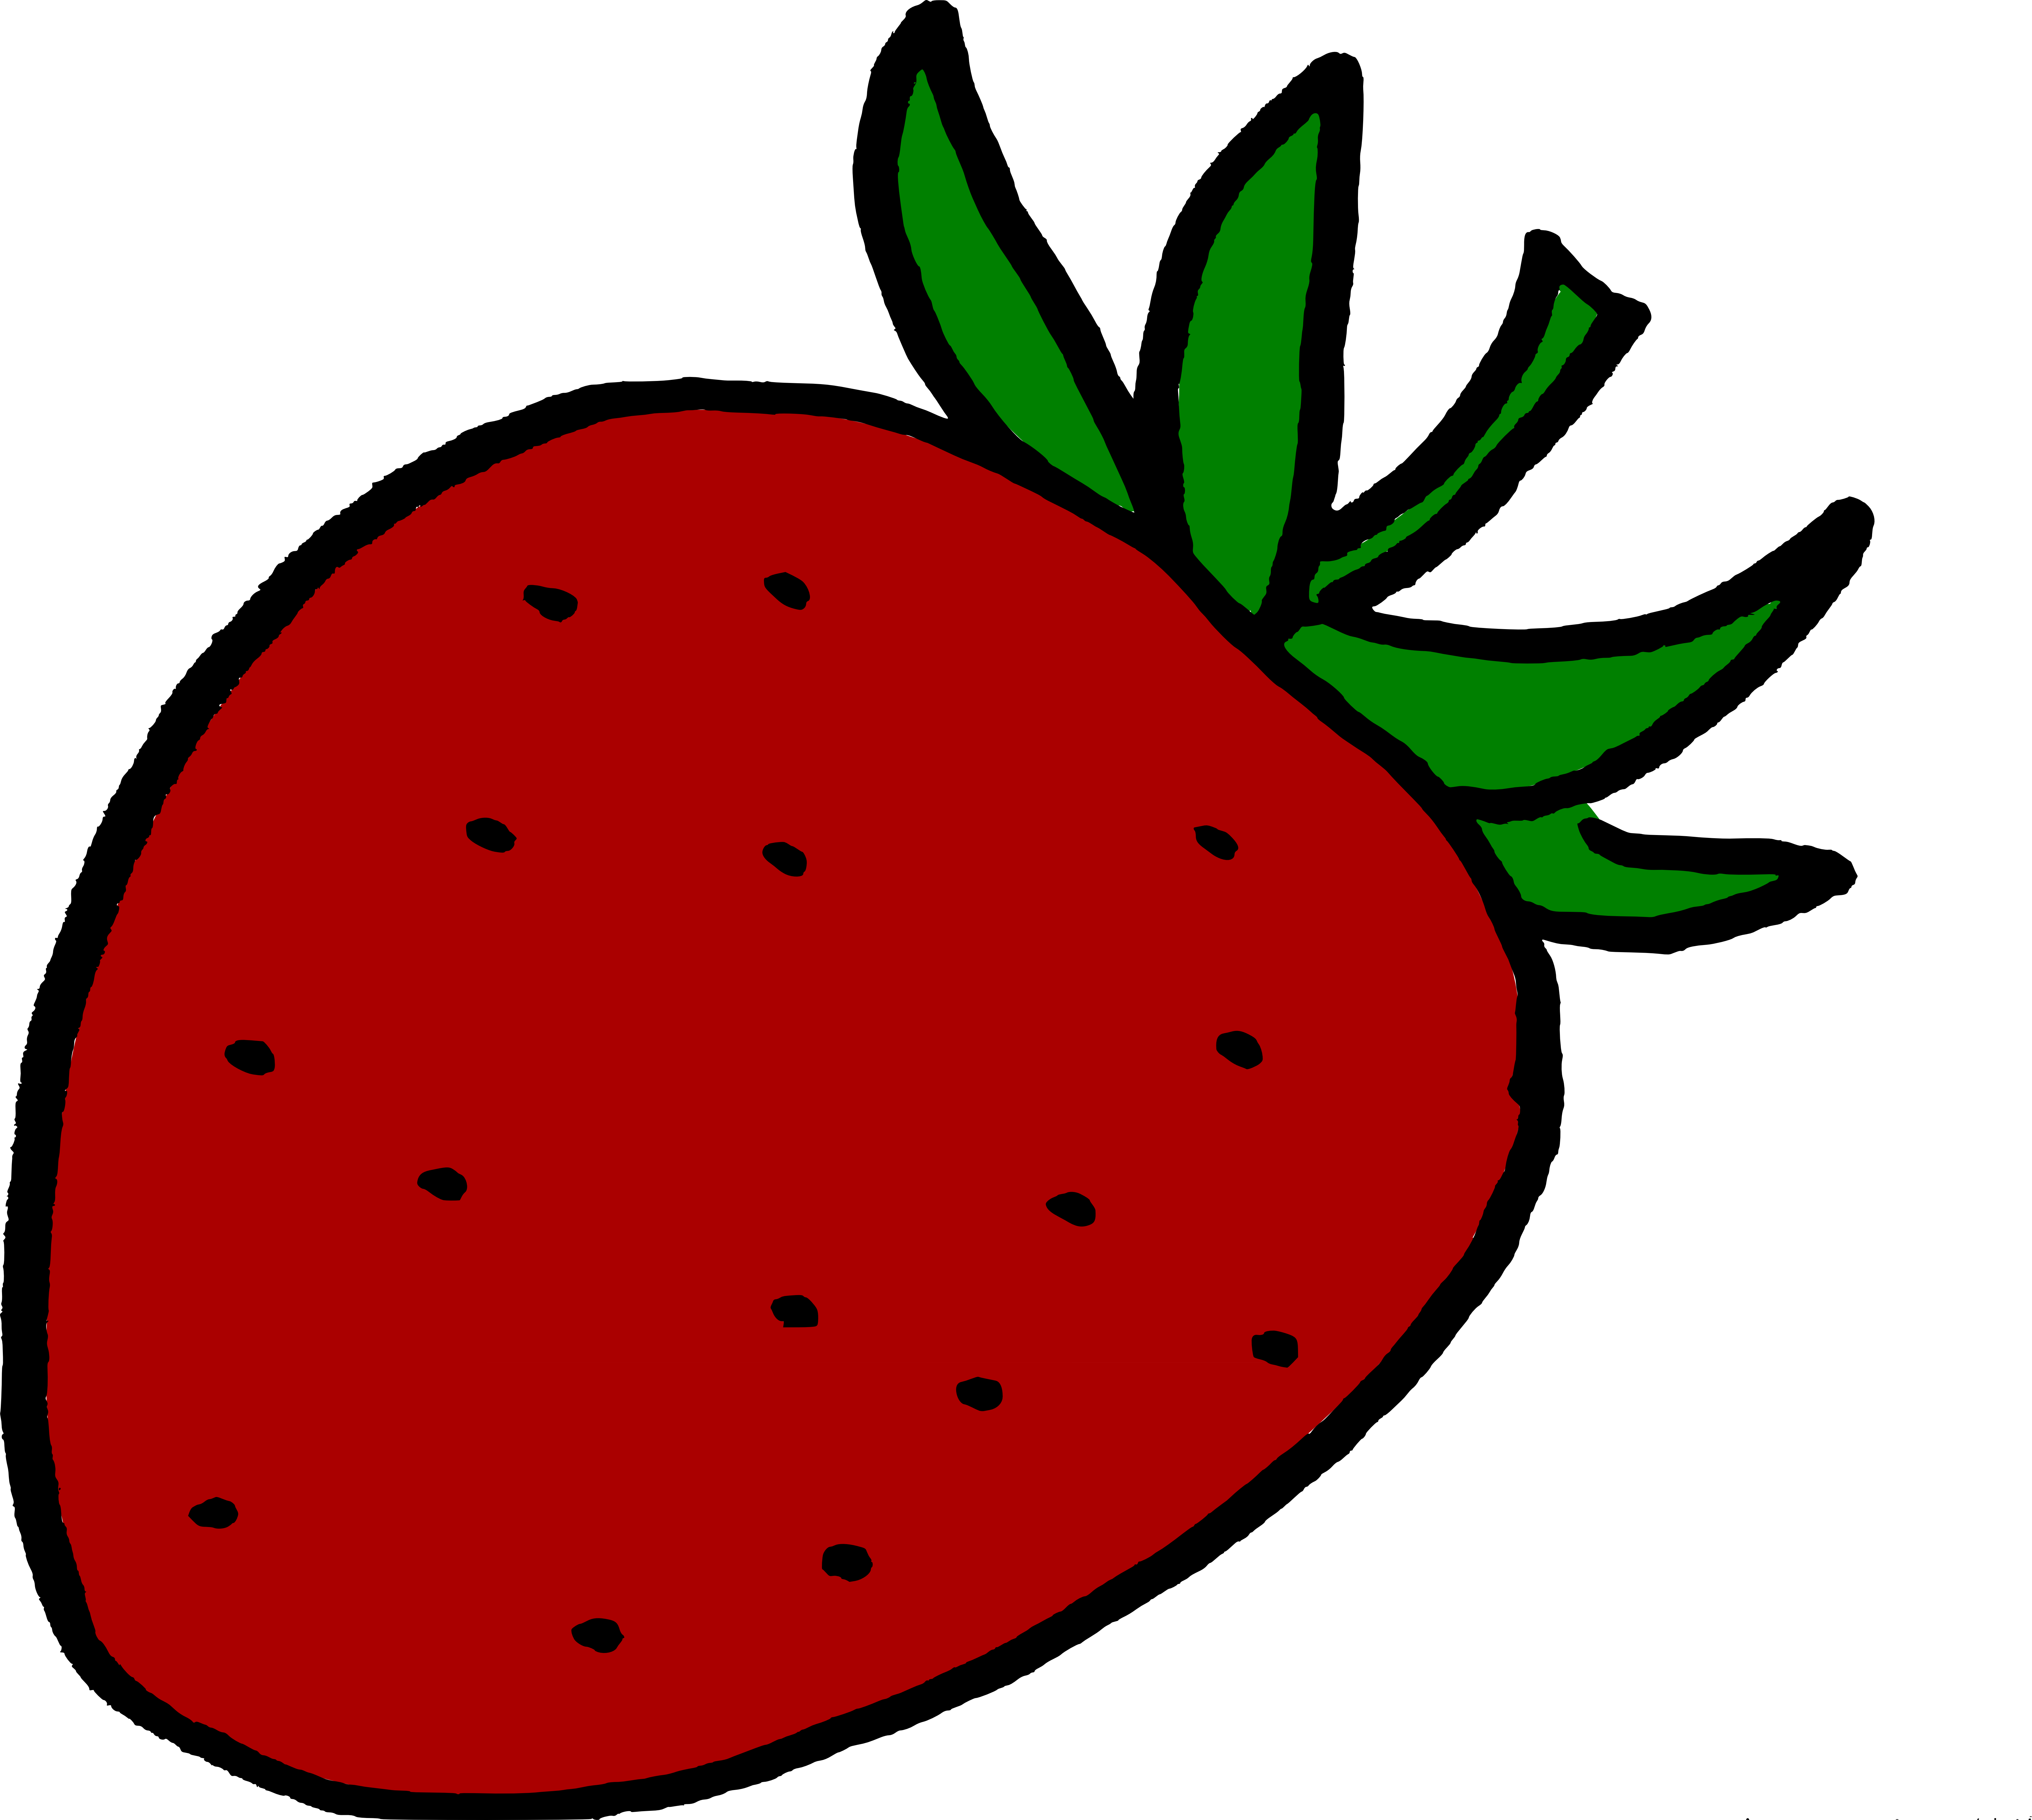 Strawberry (7115x6373)